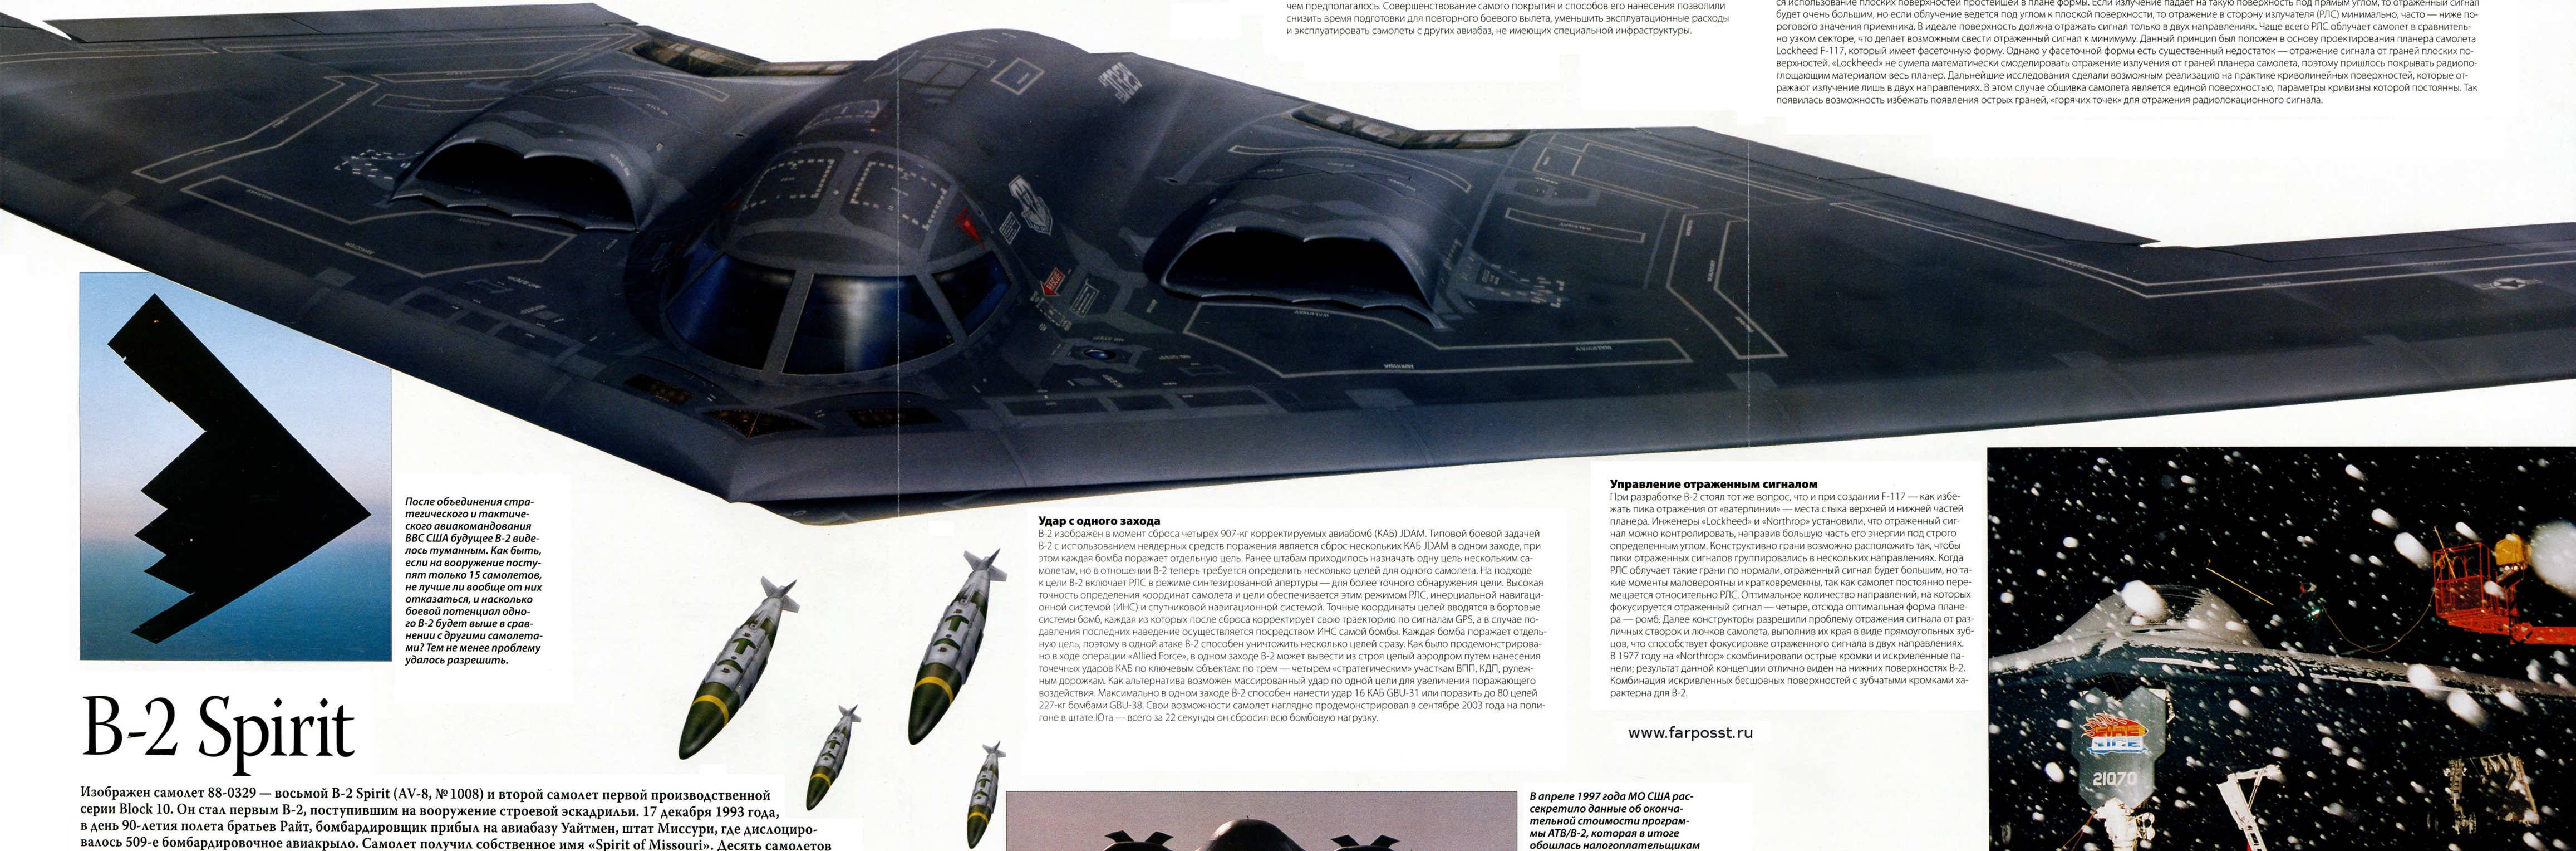 Стратегический бомбардировщик northrop b-2. бомбардировщик b-2: характеристики и фото